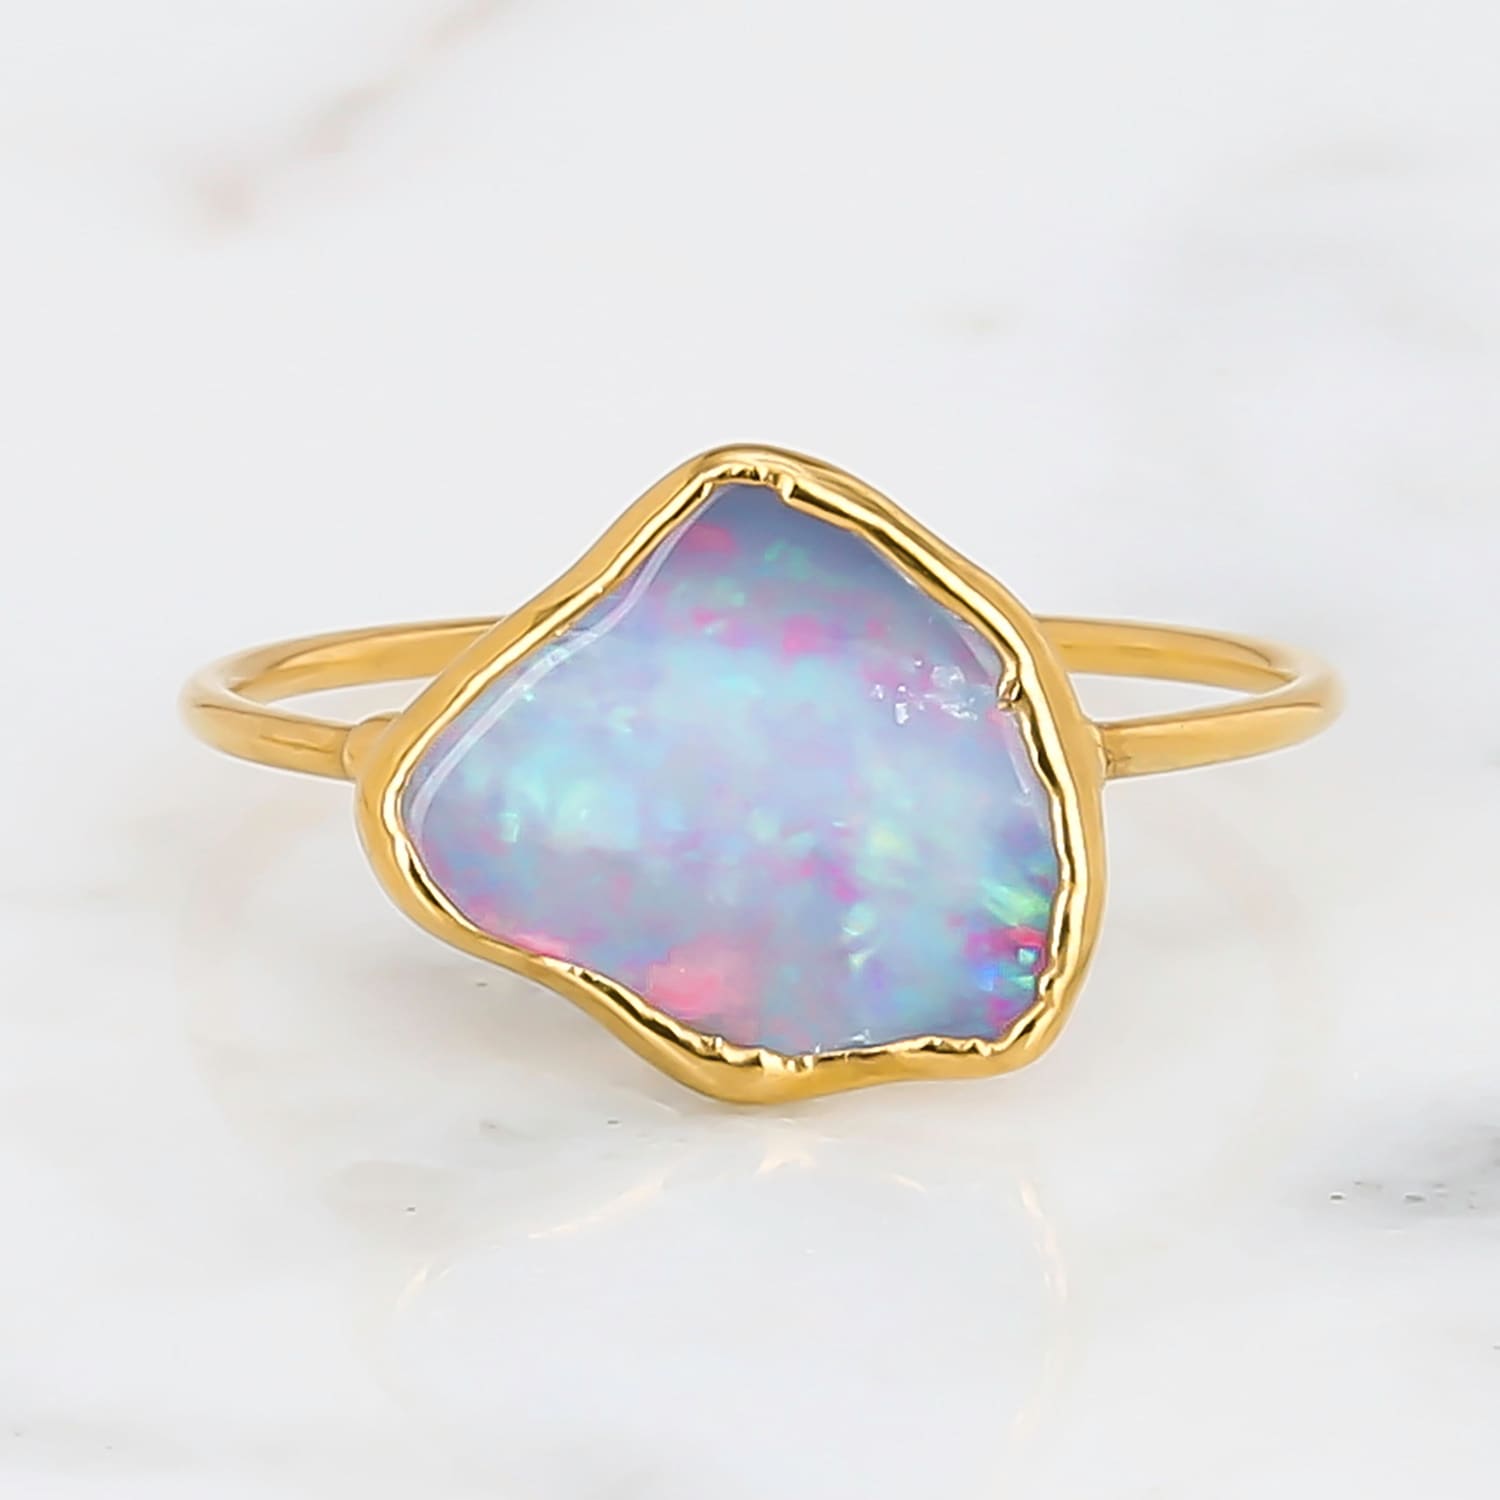 Raw Australian Fire Opal Ring Gemstone Jewelry Rough Crystal